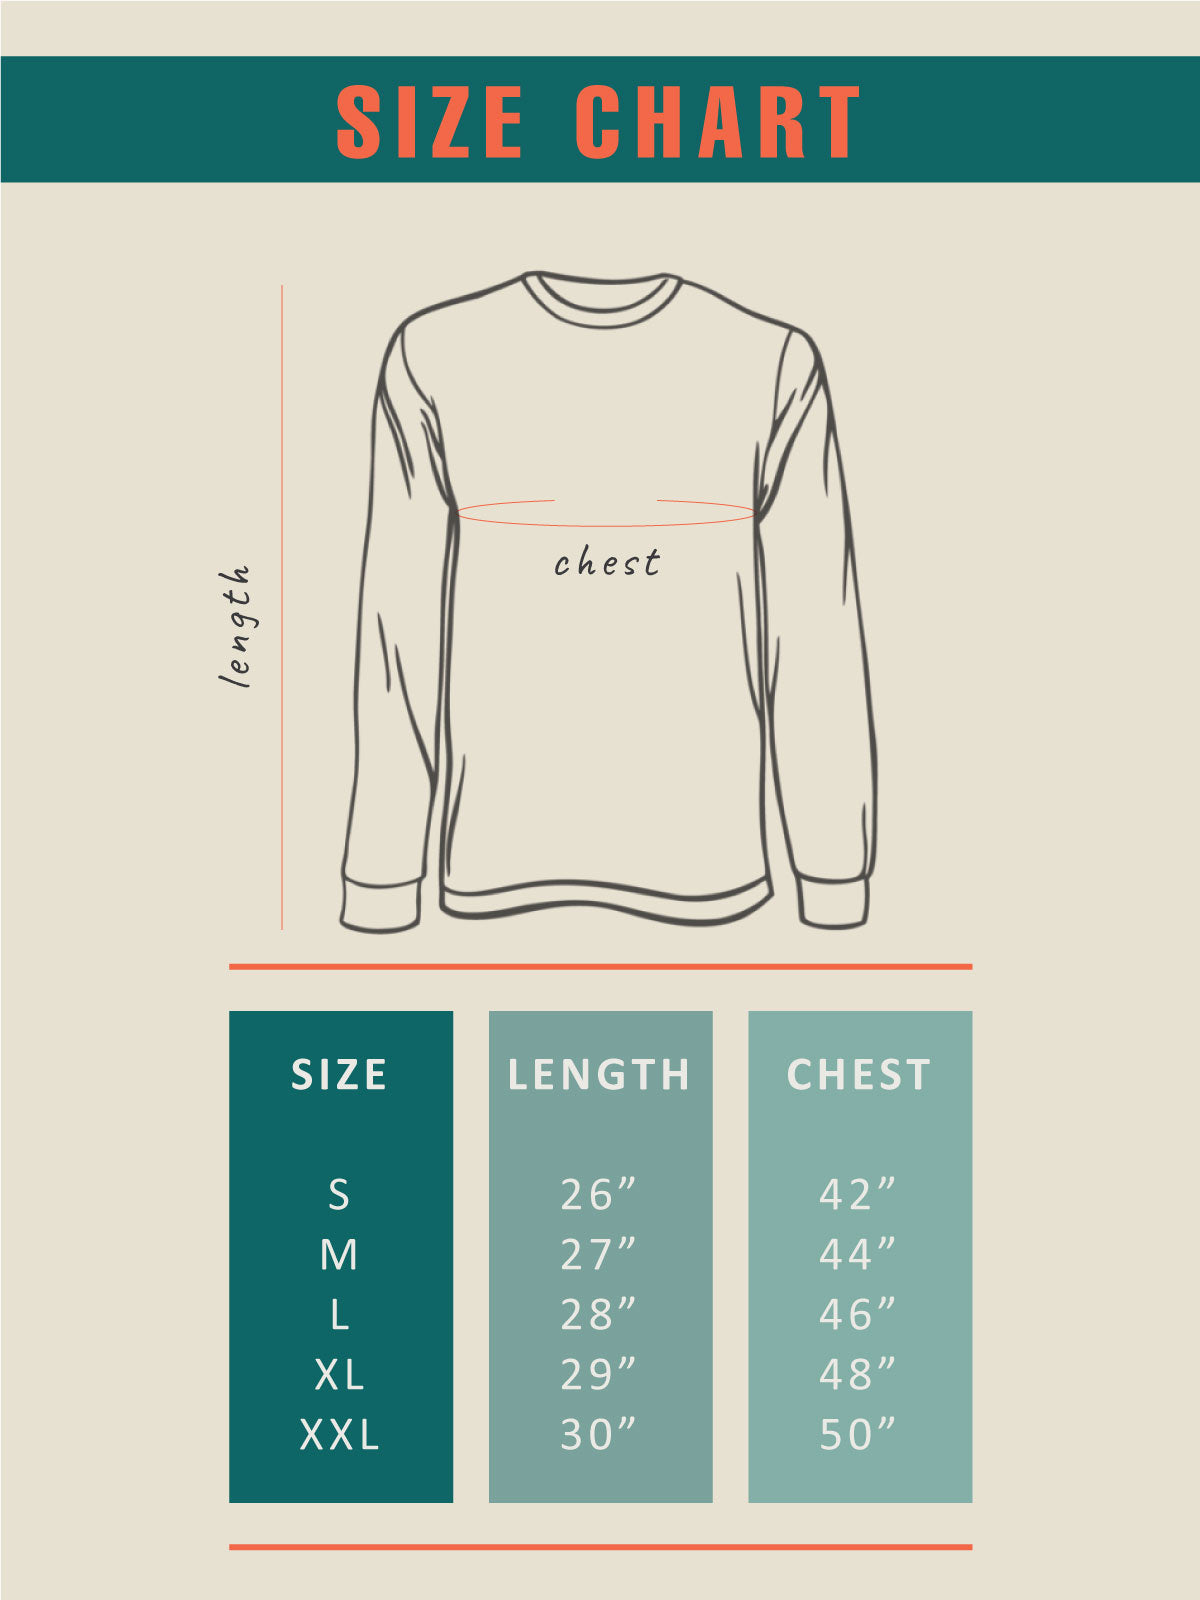 Silver Grey | Unisex Plain Sweatshirt